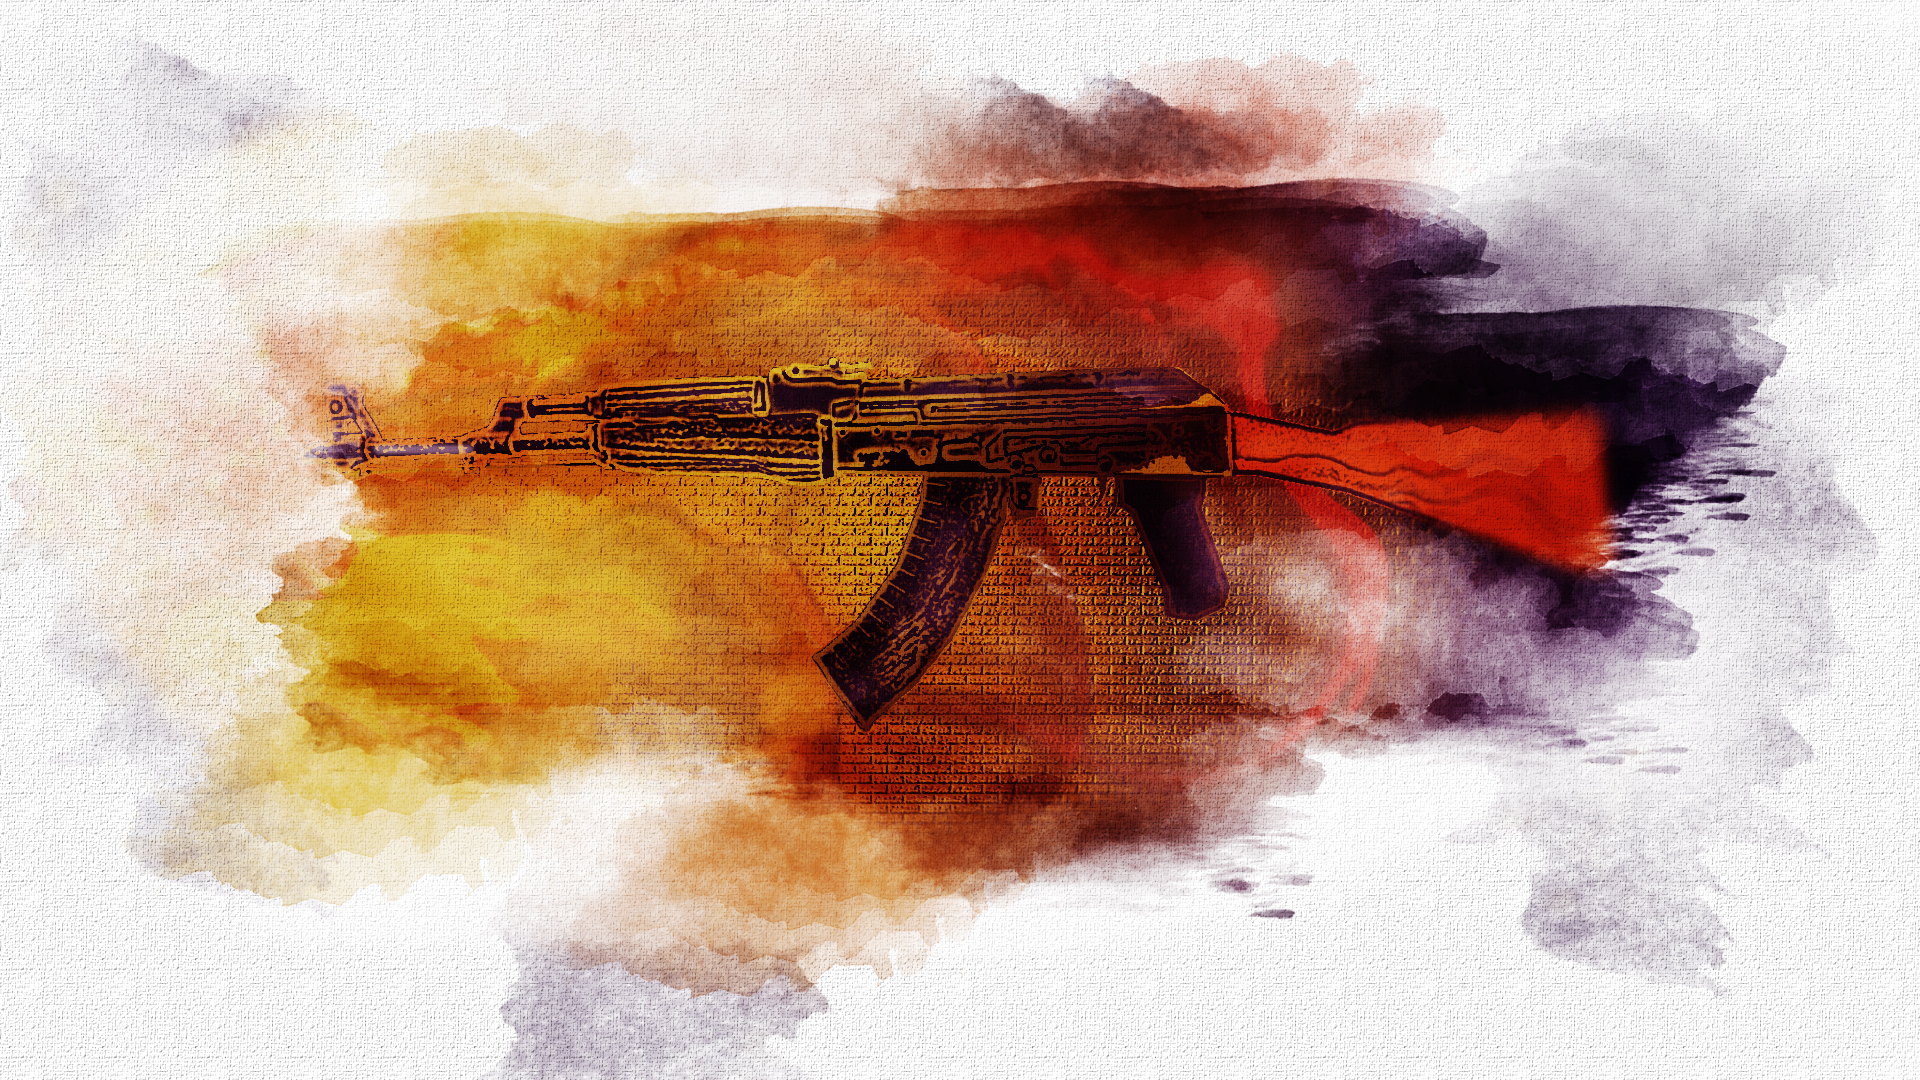 AK-47 Vanillia wallpaper